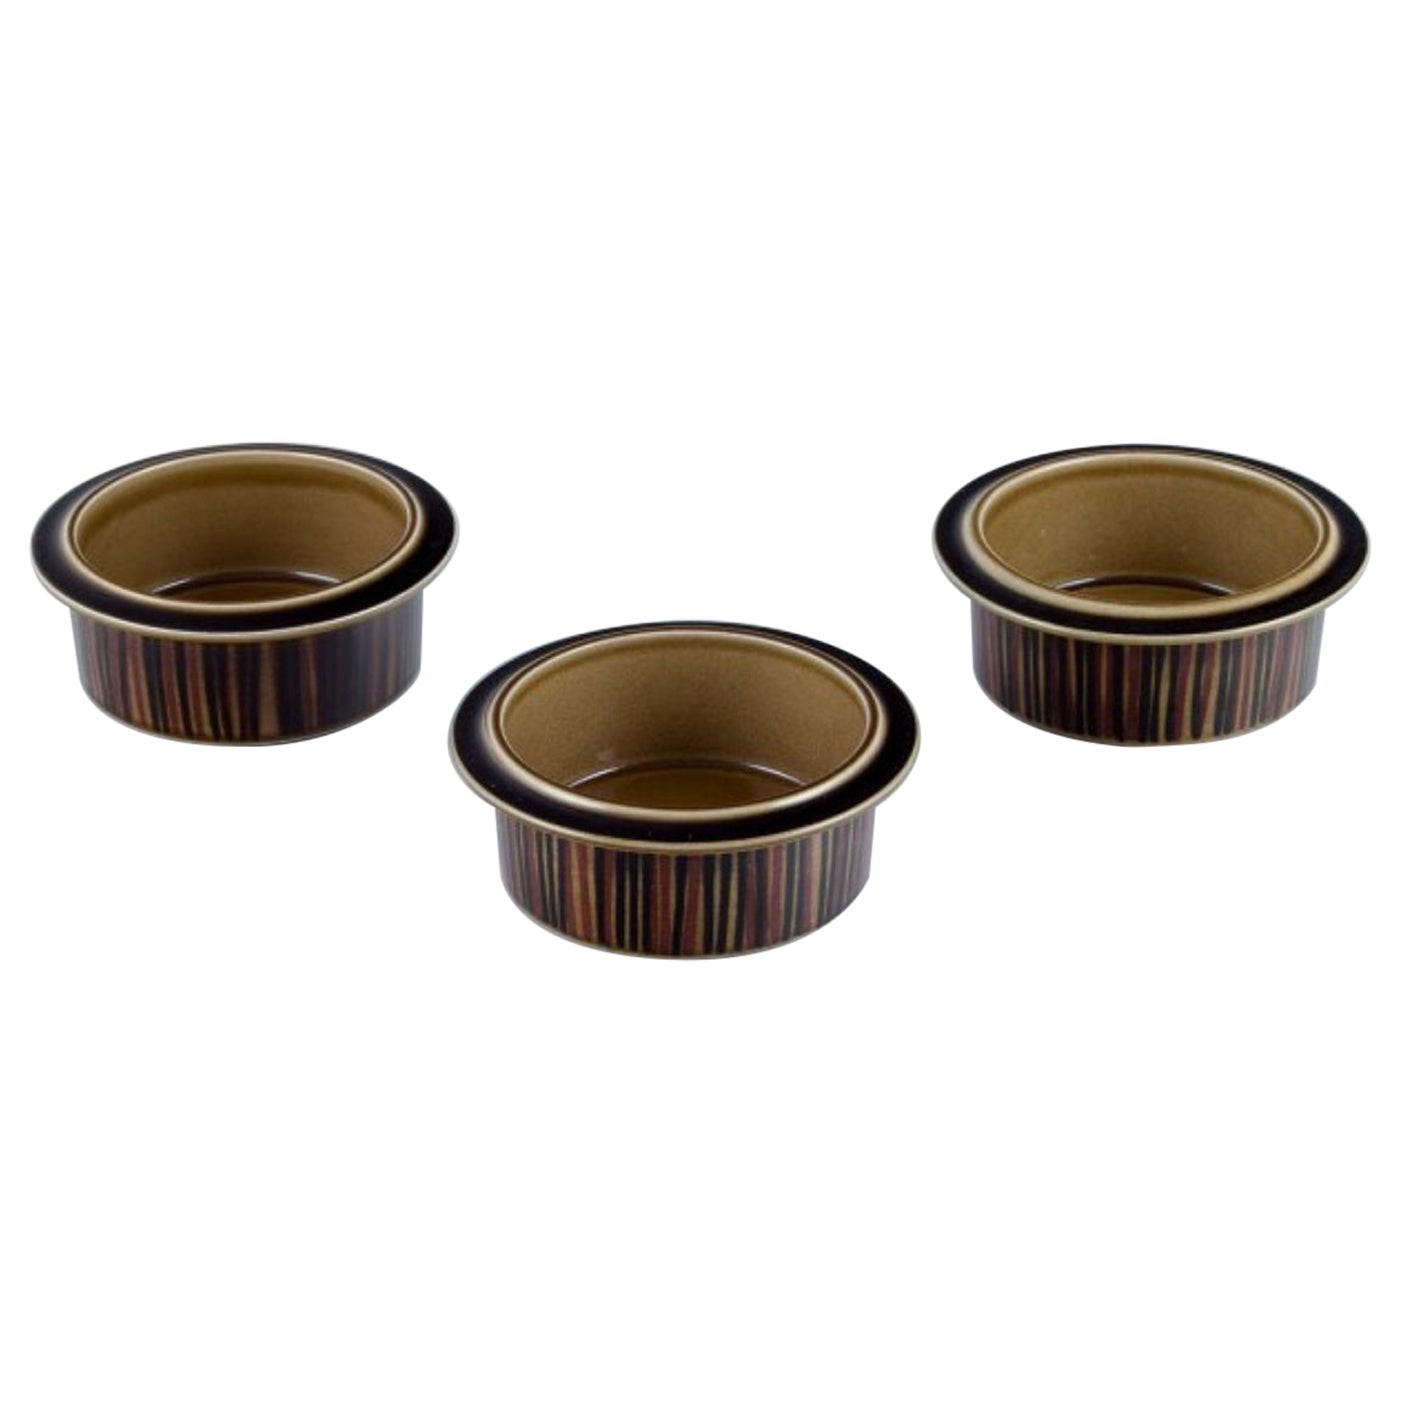 Gunvor Olin-Grönqvist for Arabia, "Cosmos" three bowls in stoneware. For Sale